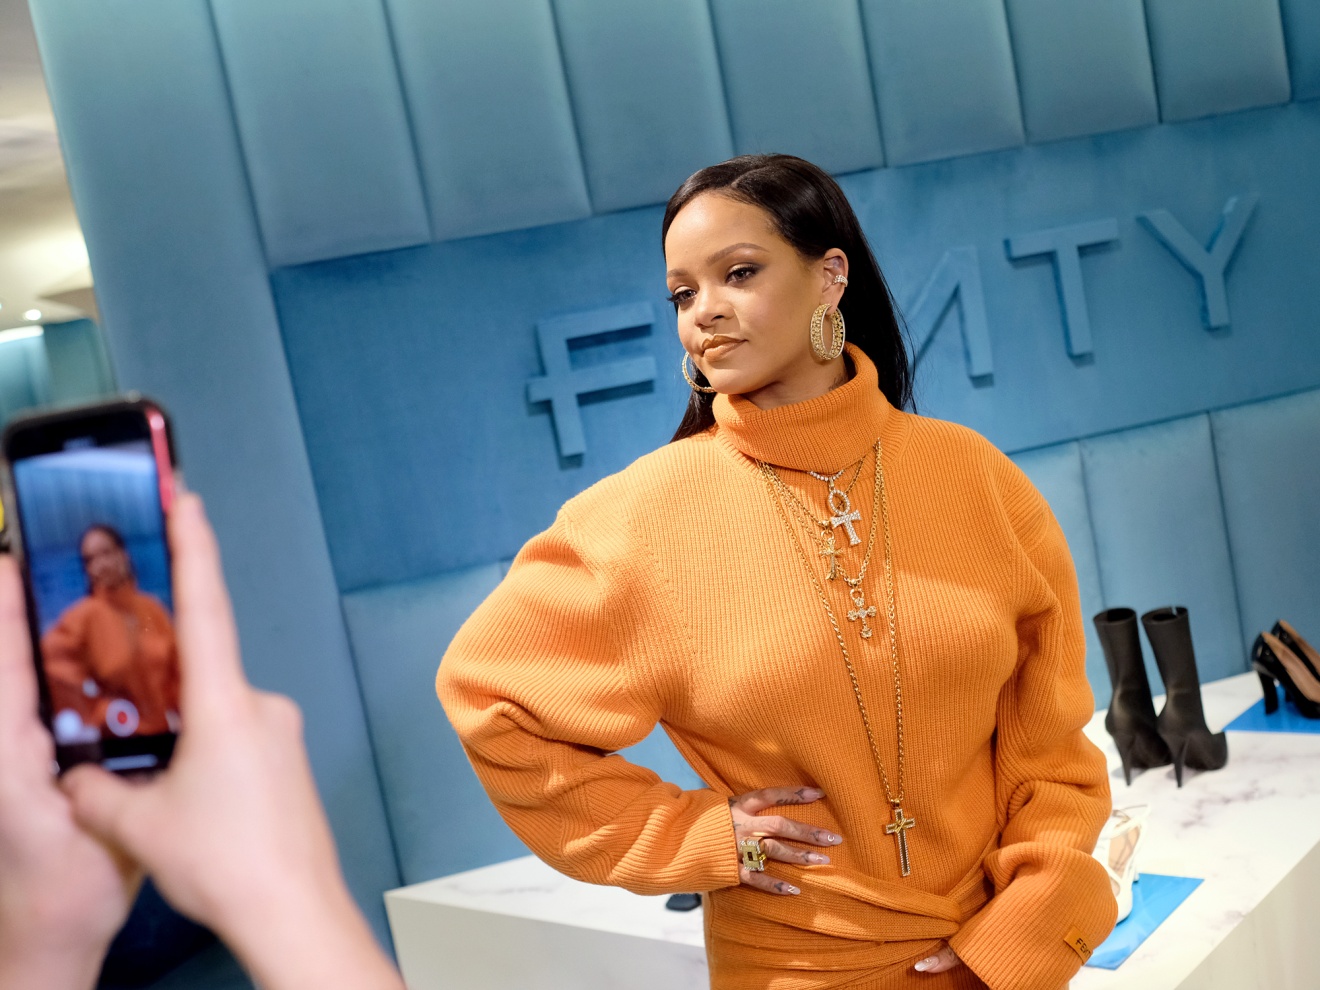 Rihanna's Savage x Fenty Lingerie Company Plans for $3 Billion USD